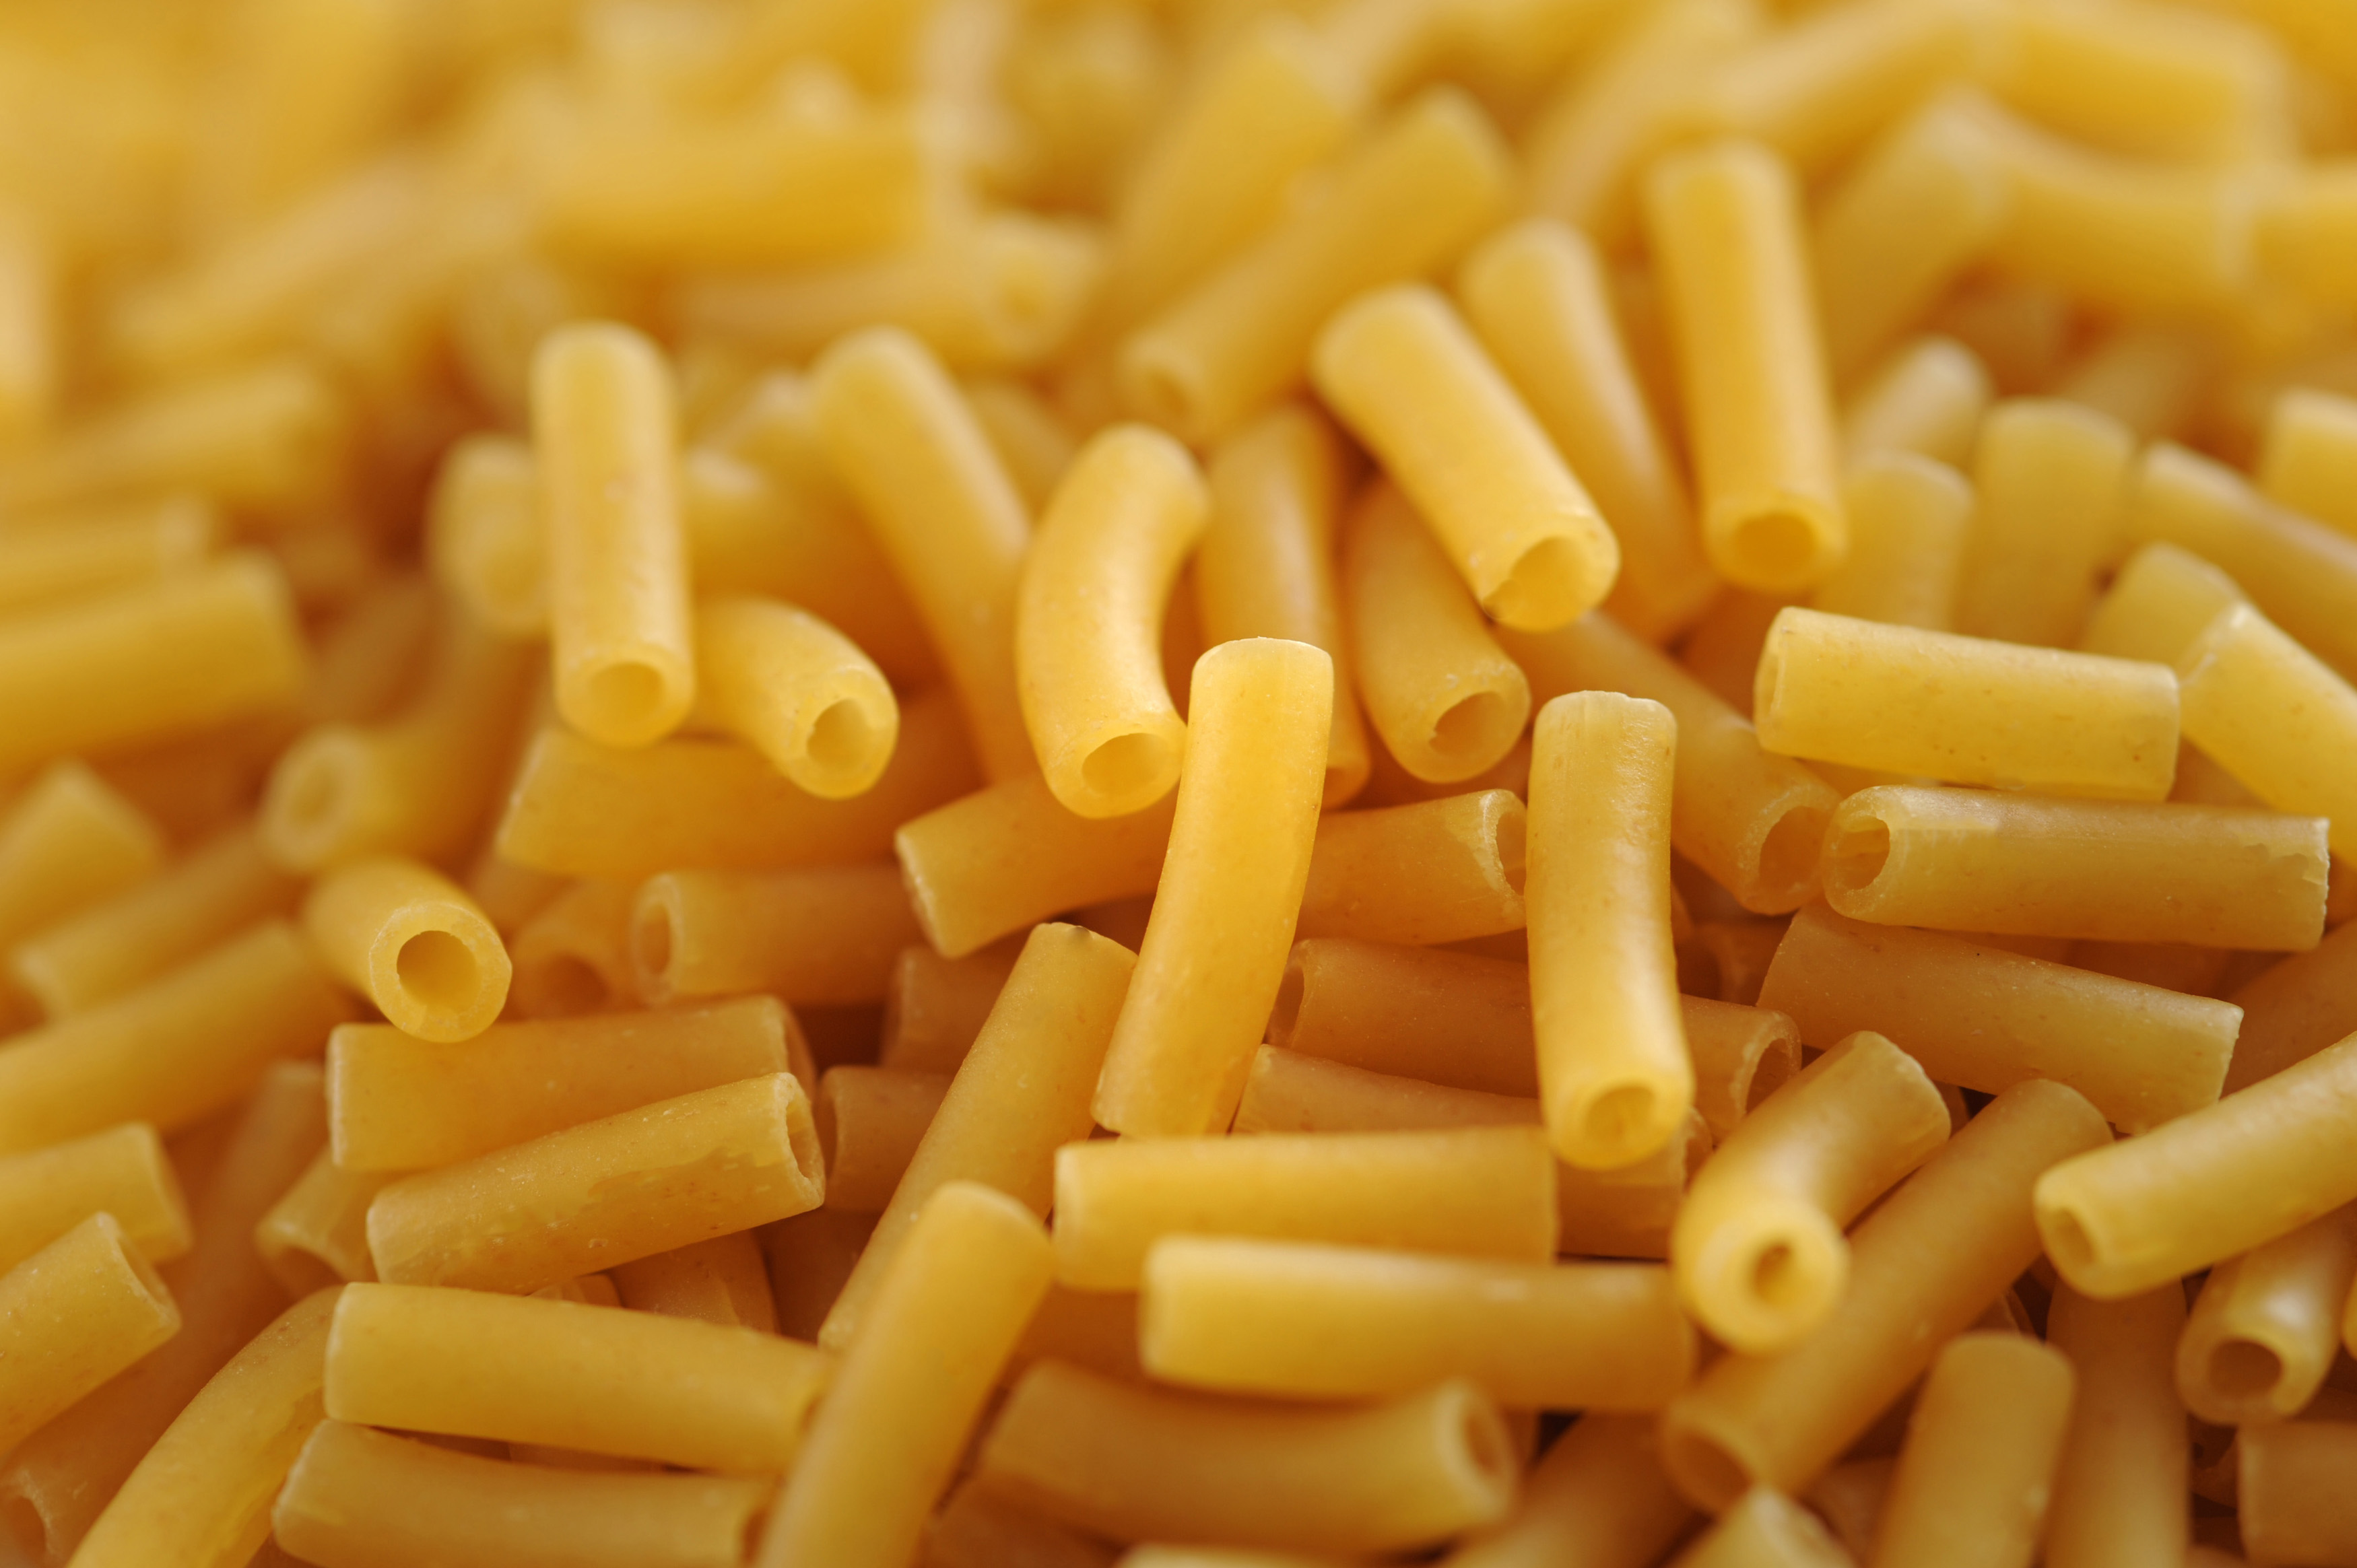 Free Stock Photo 11790 uncooked macaroni pasta | freeimageslive